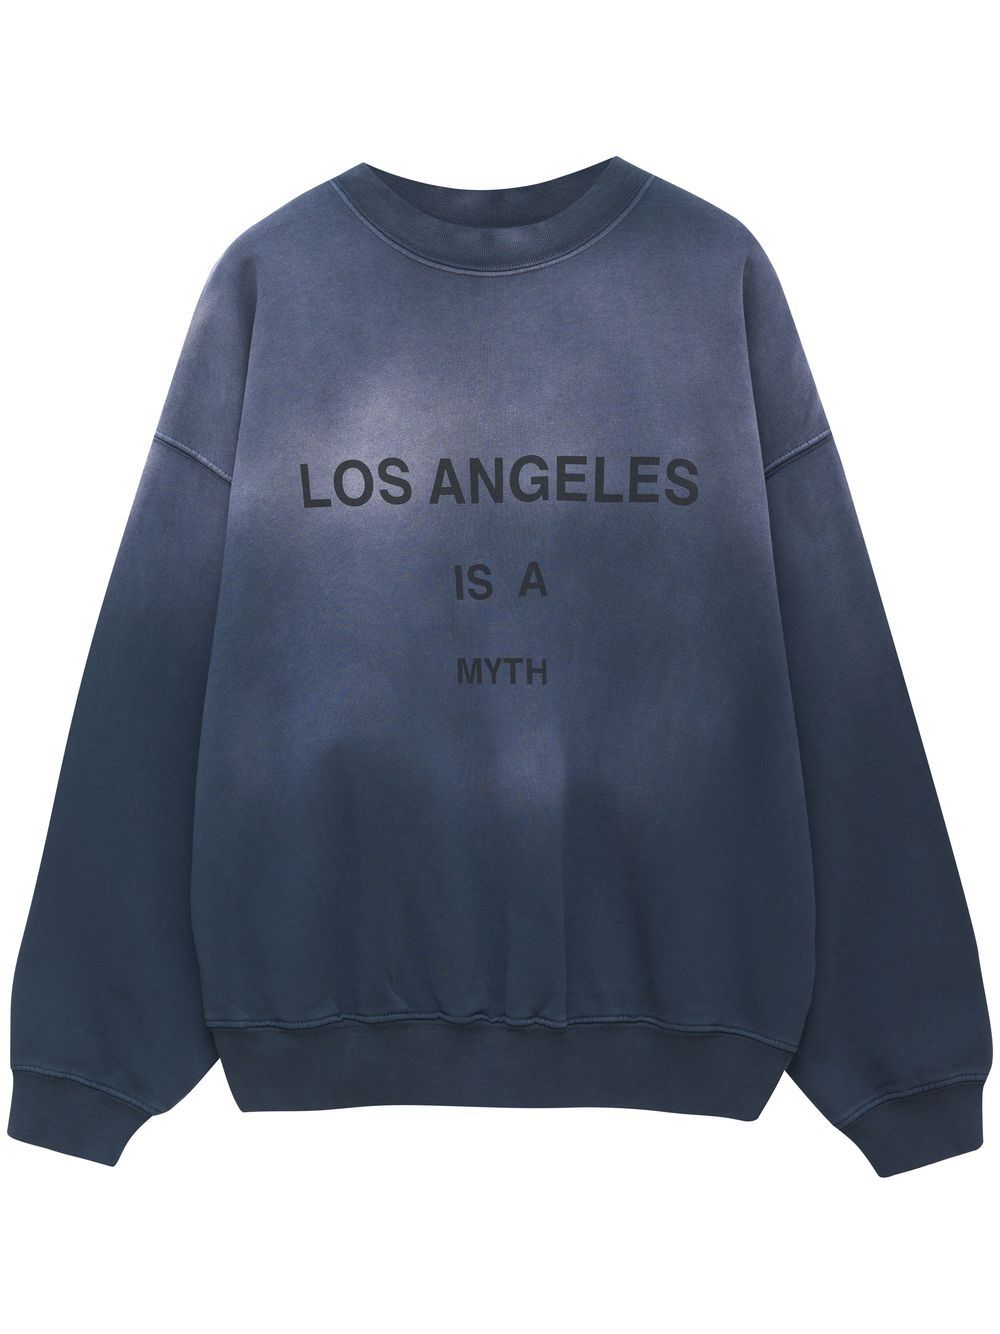 ANINE BING Jaci Myth Los Angeles sweatshirt - Blue